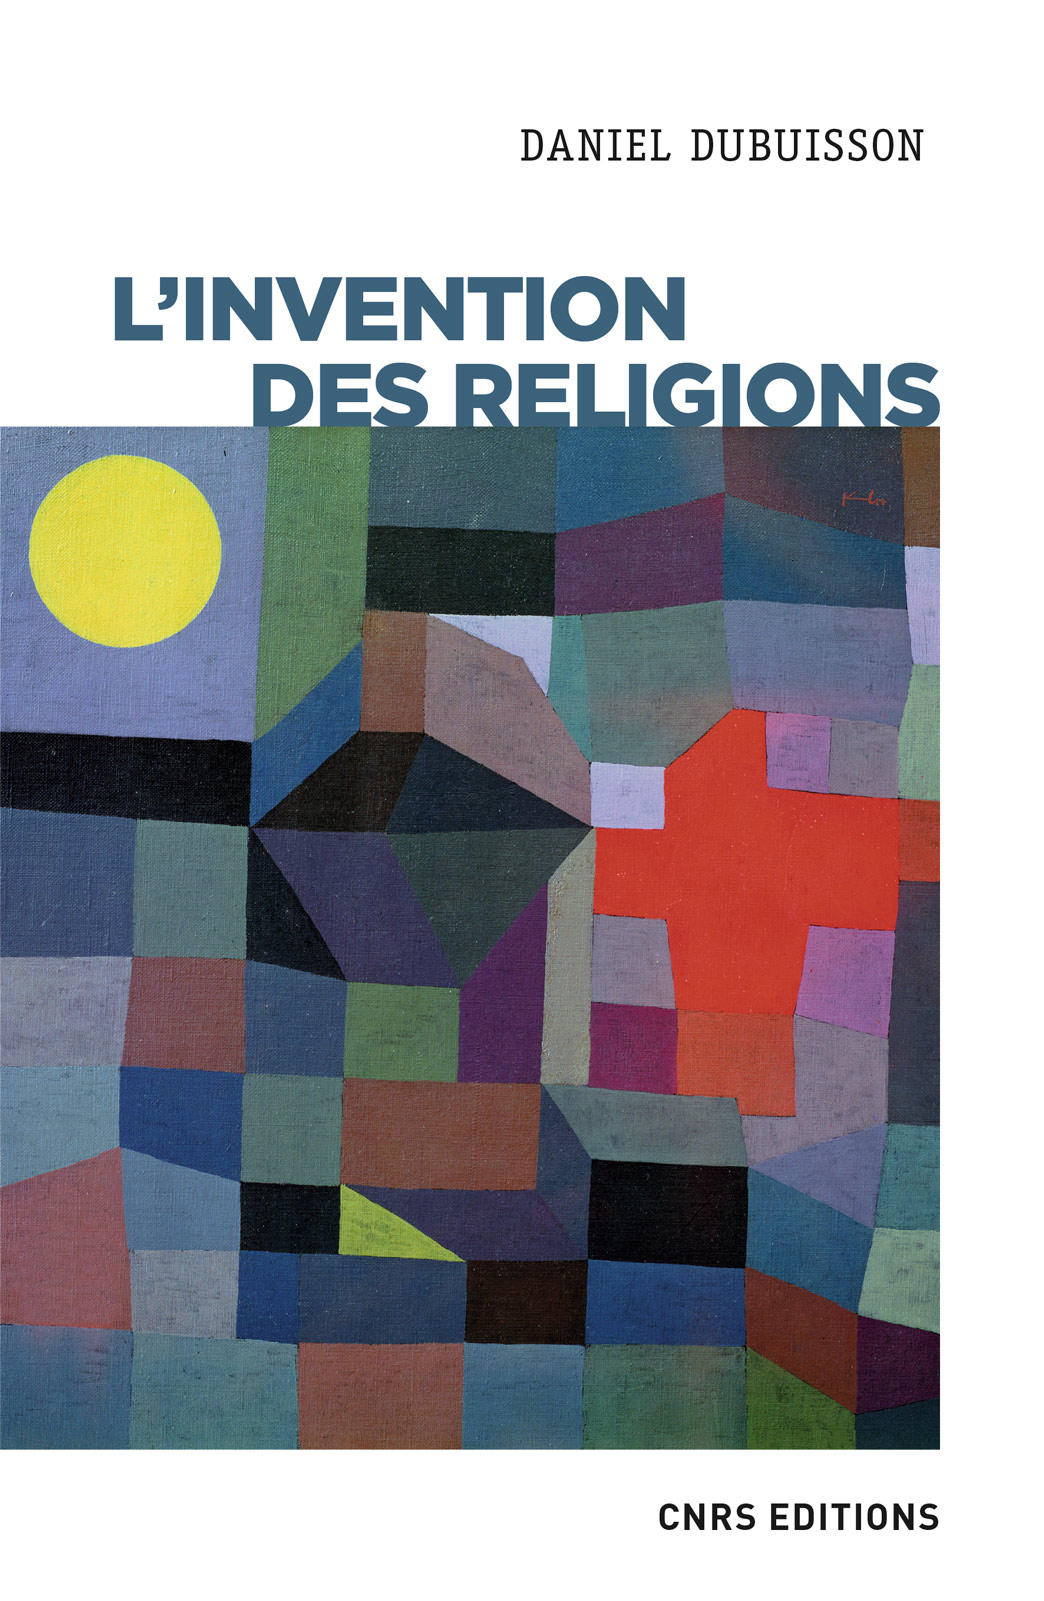 Invention des religions